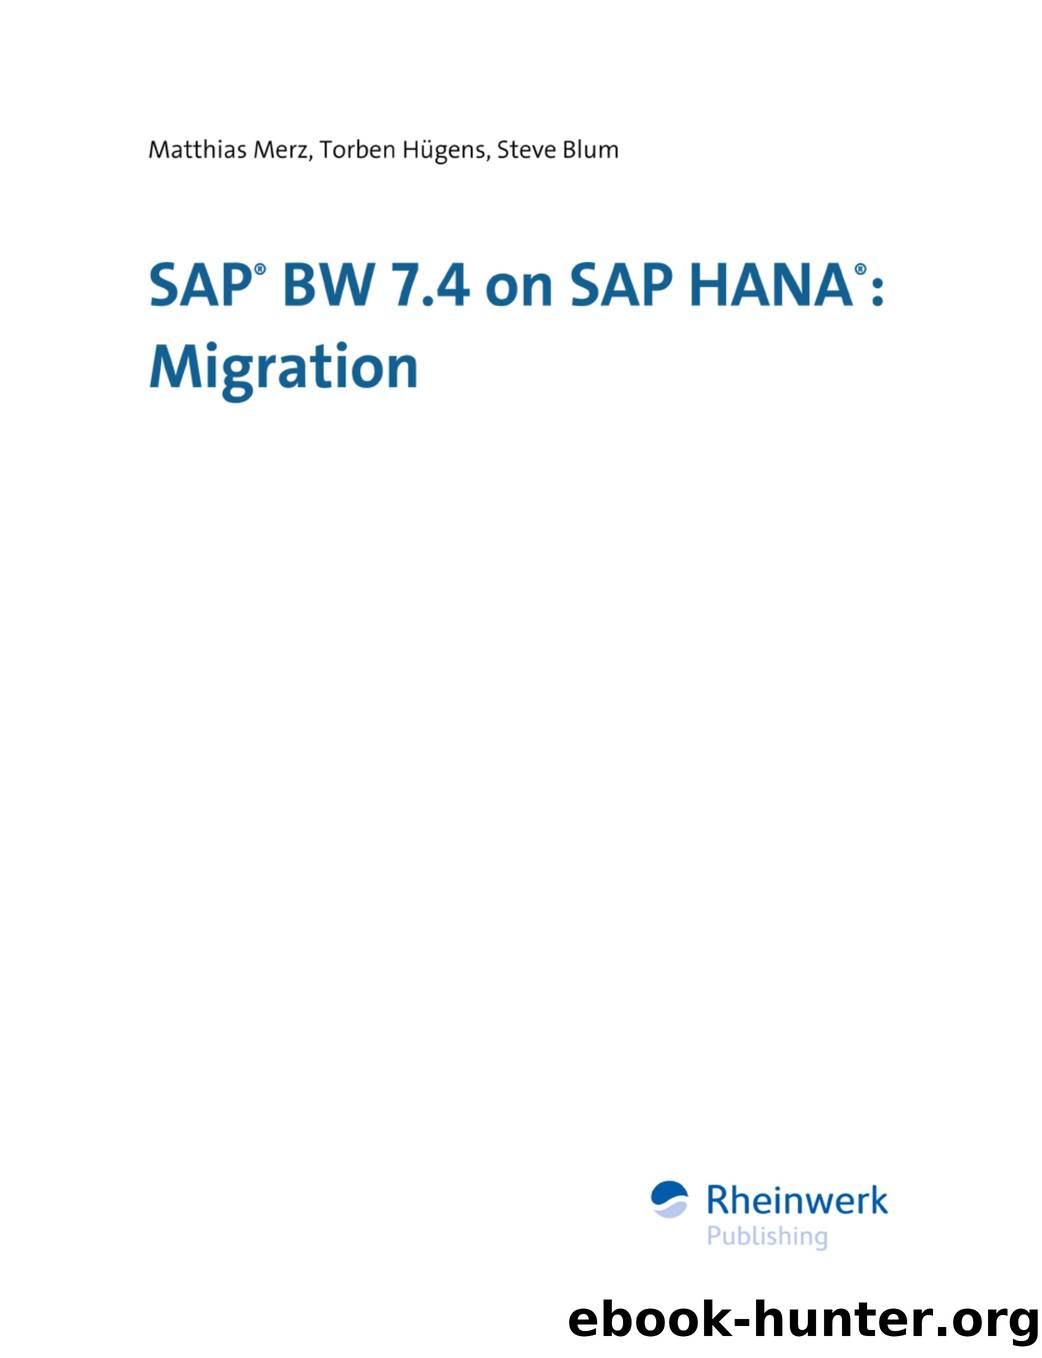 SAP BW 7.4 on SAP HANA by Migration